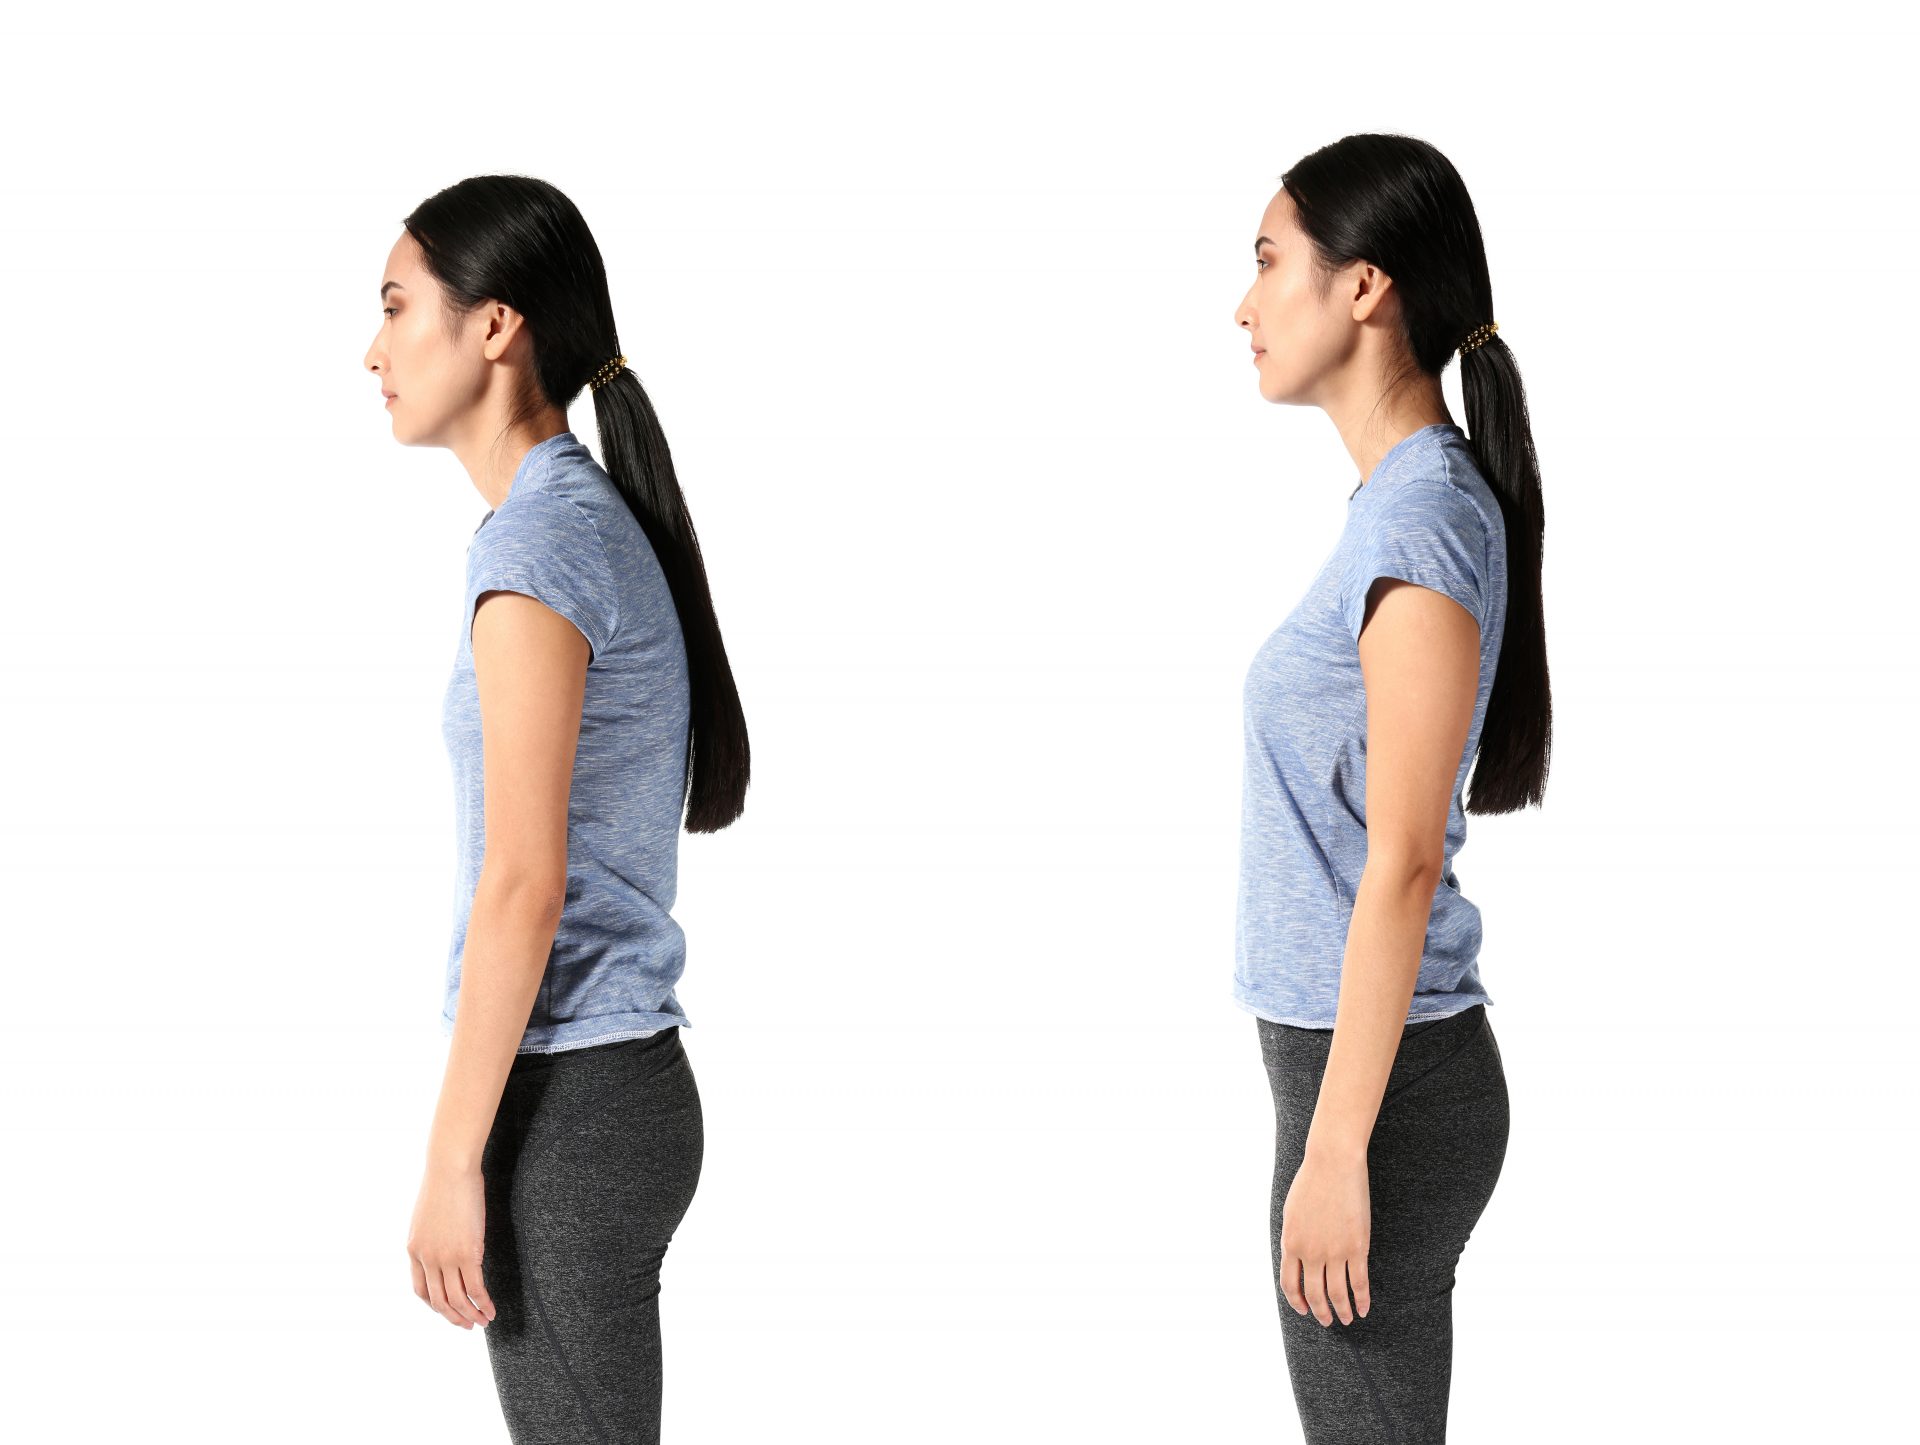 Improves Posture